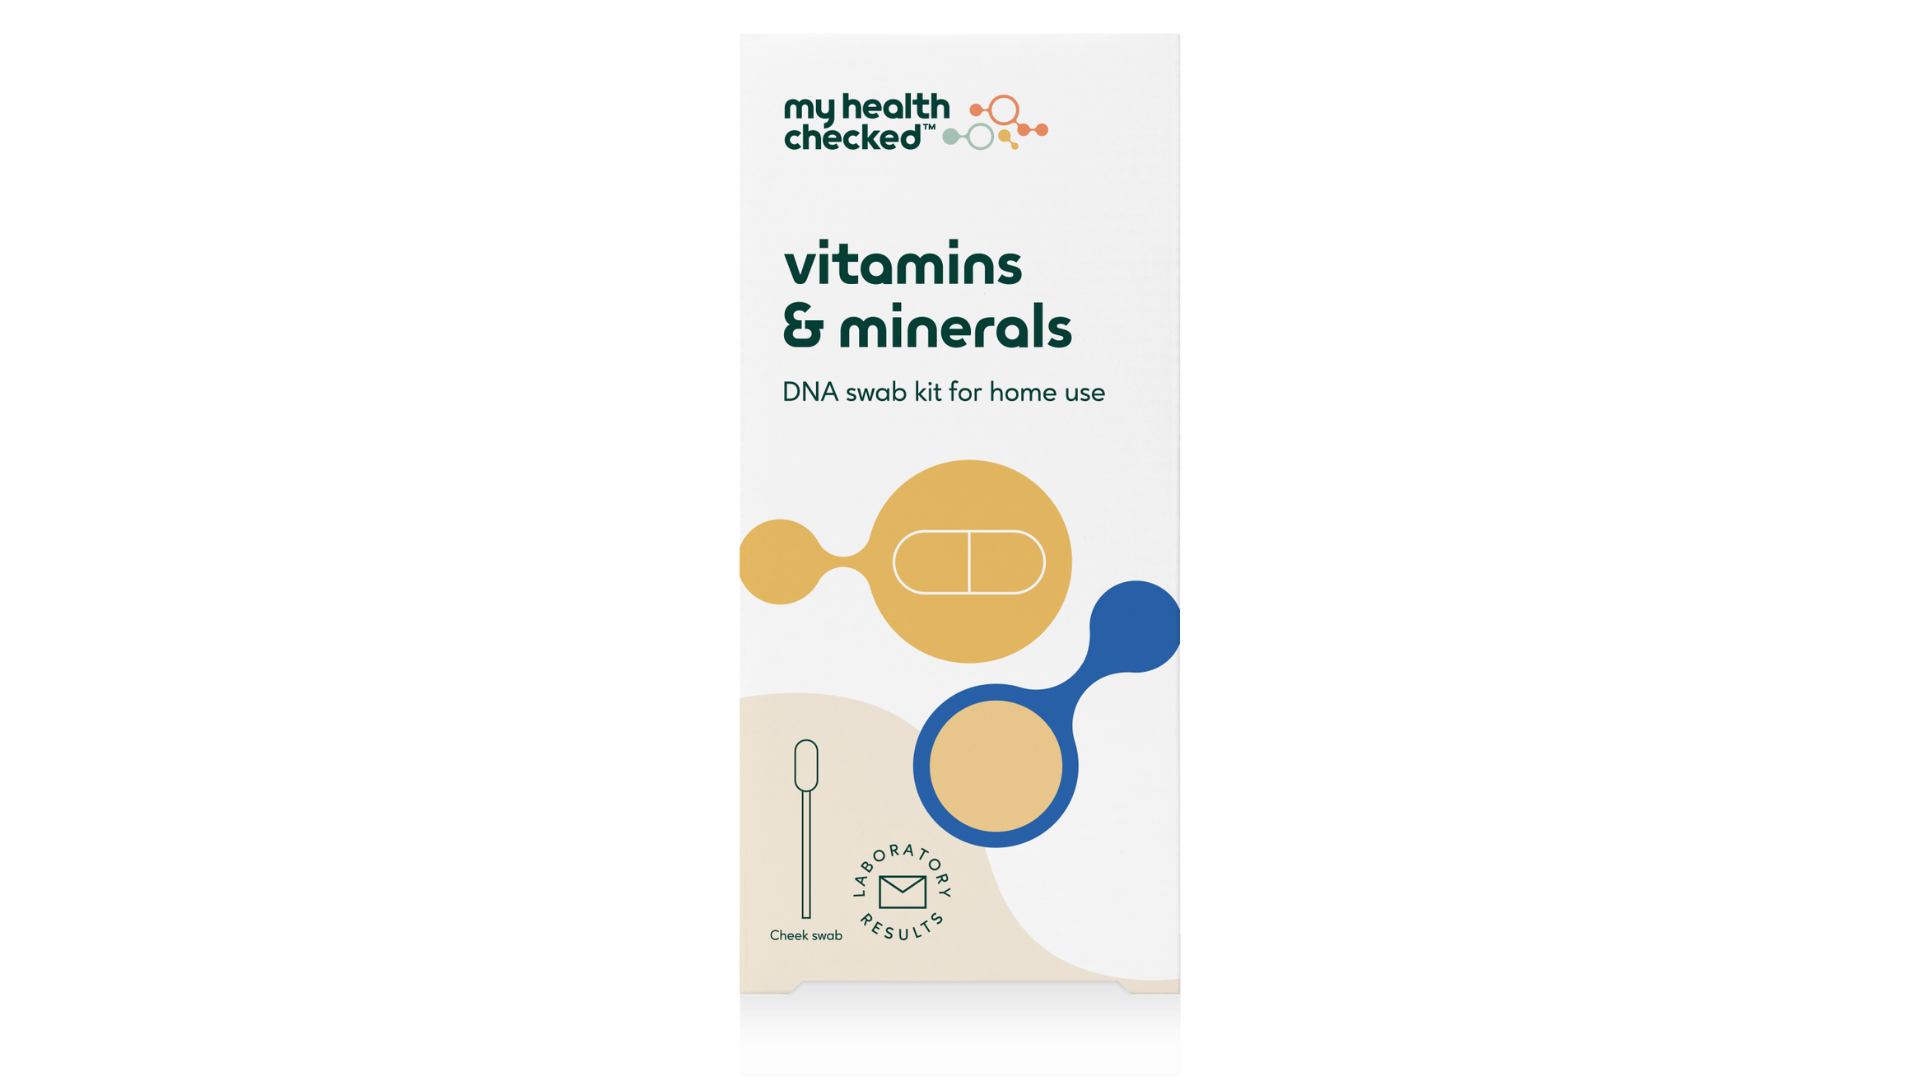 MyHealthChecked's Vitamins & Minerals DNA Test